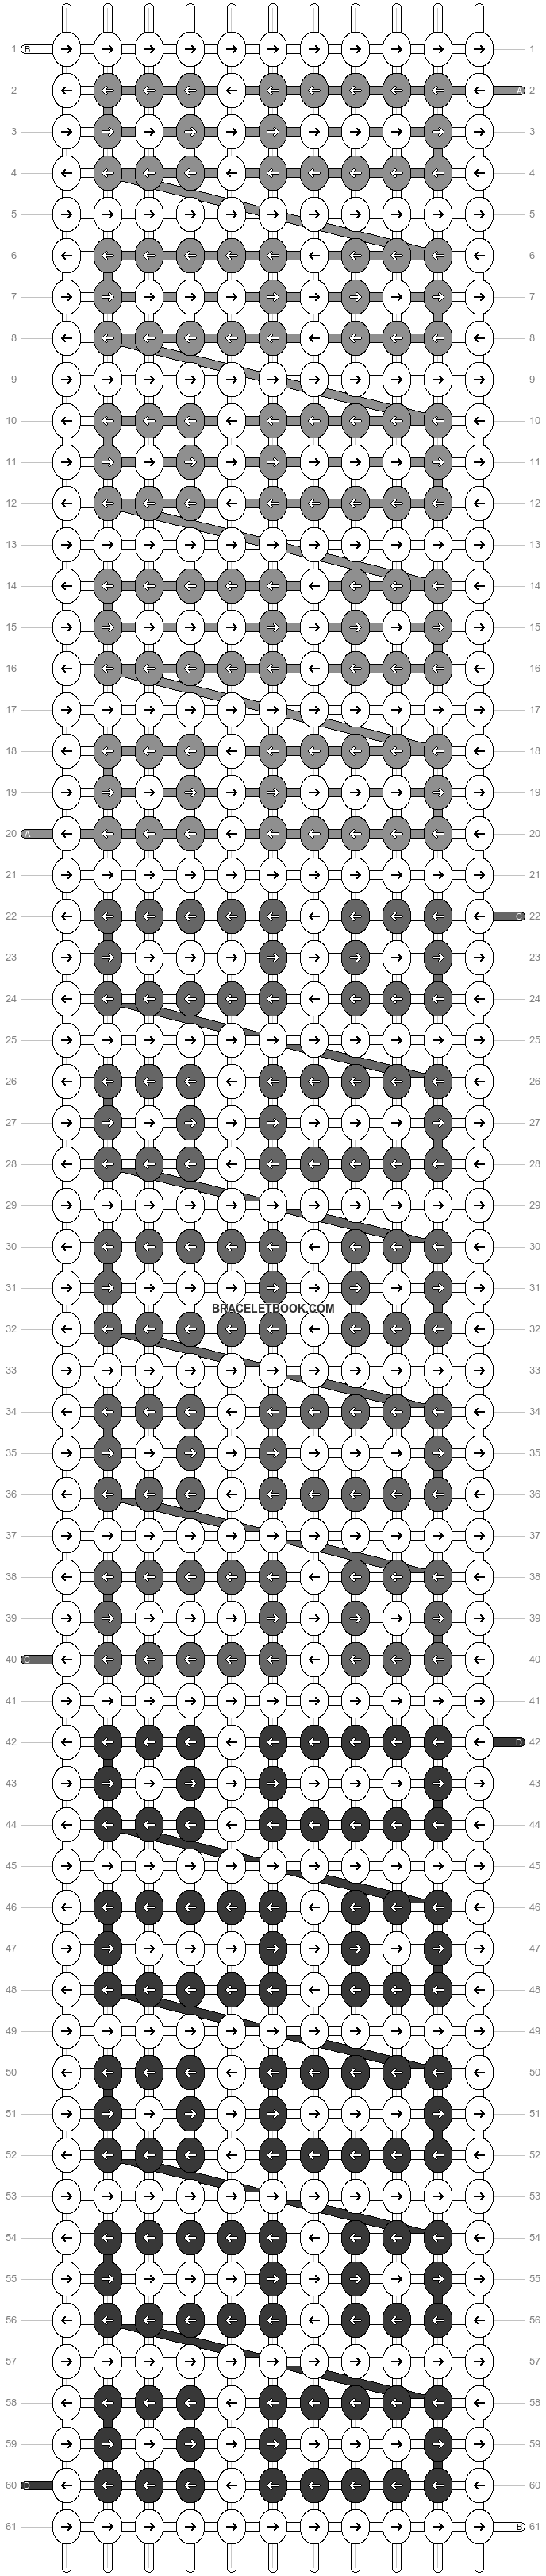 Alpha pattern #54067 variation #98884 pattern